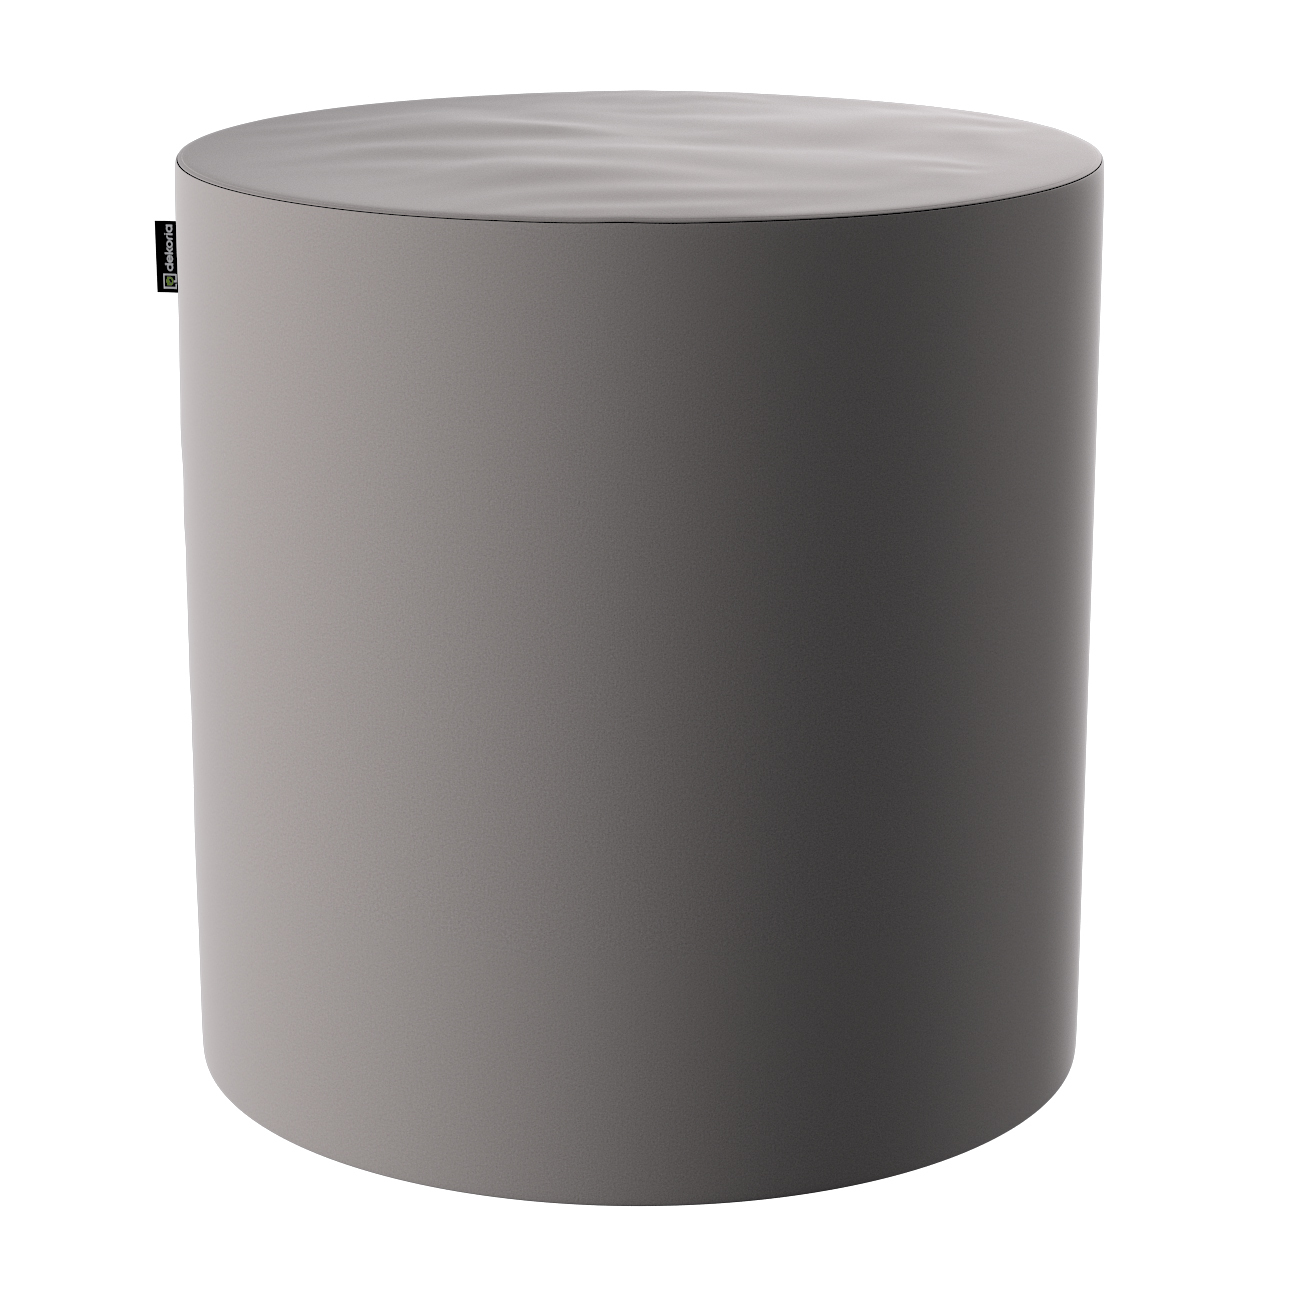 Pouf Barrel, taupengrau, ø40 cm x 40 cm, Velvet (704-11) günstig online kaufen